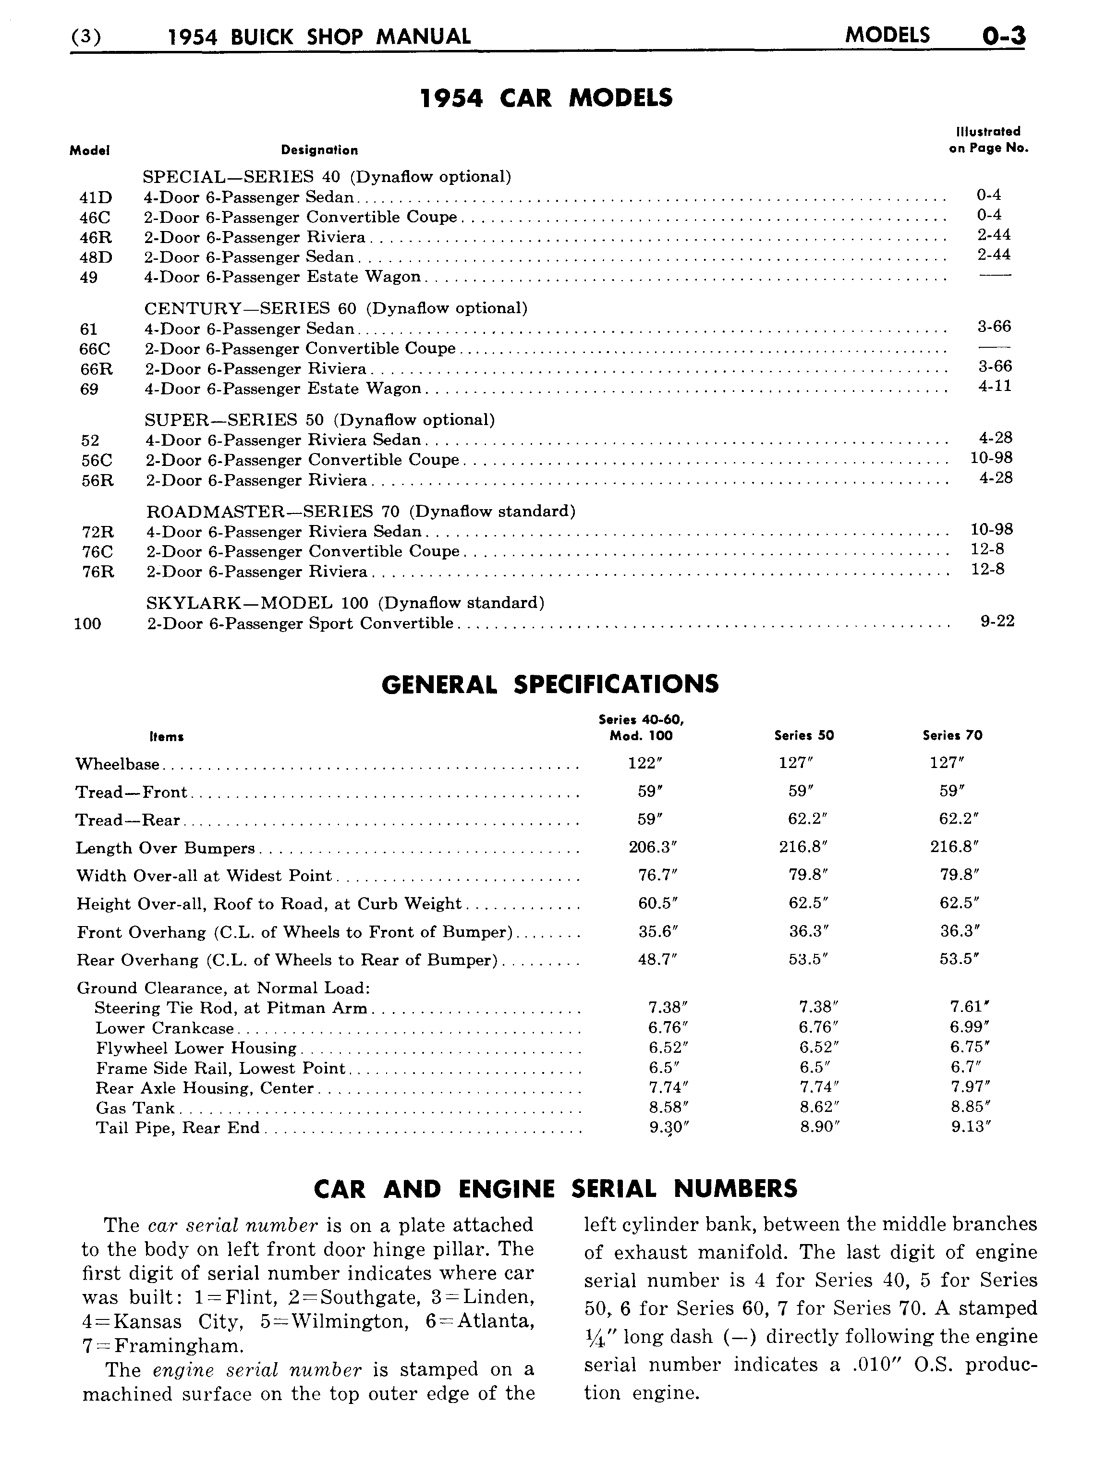 n_01 1954 Buick Shop Manual - Gen Information-005-005.jpg